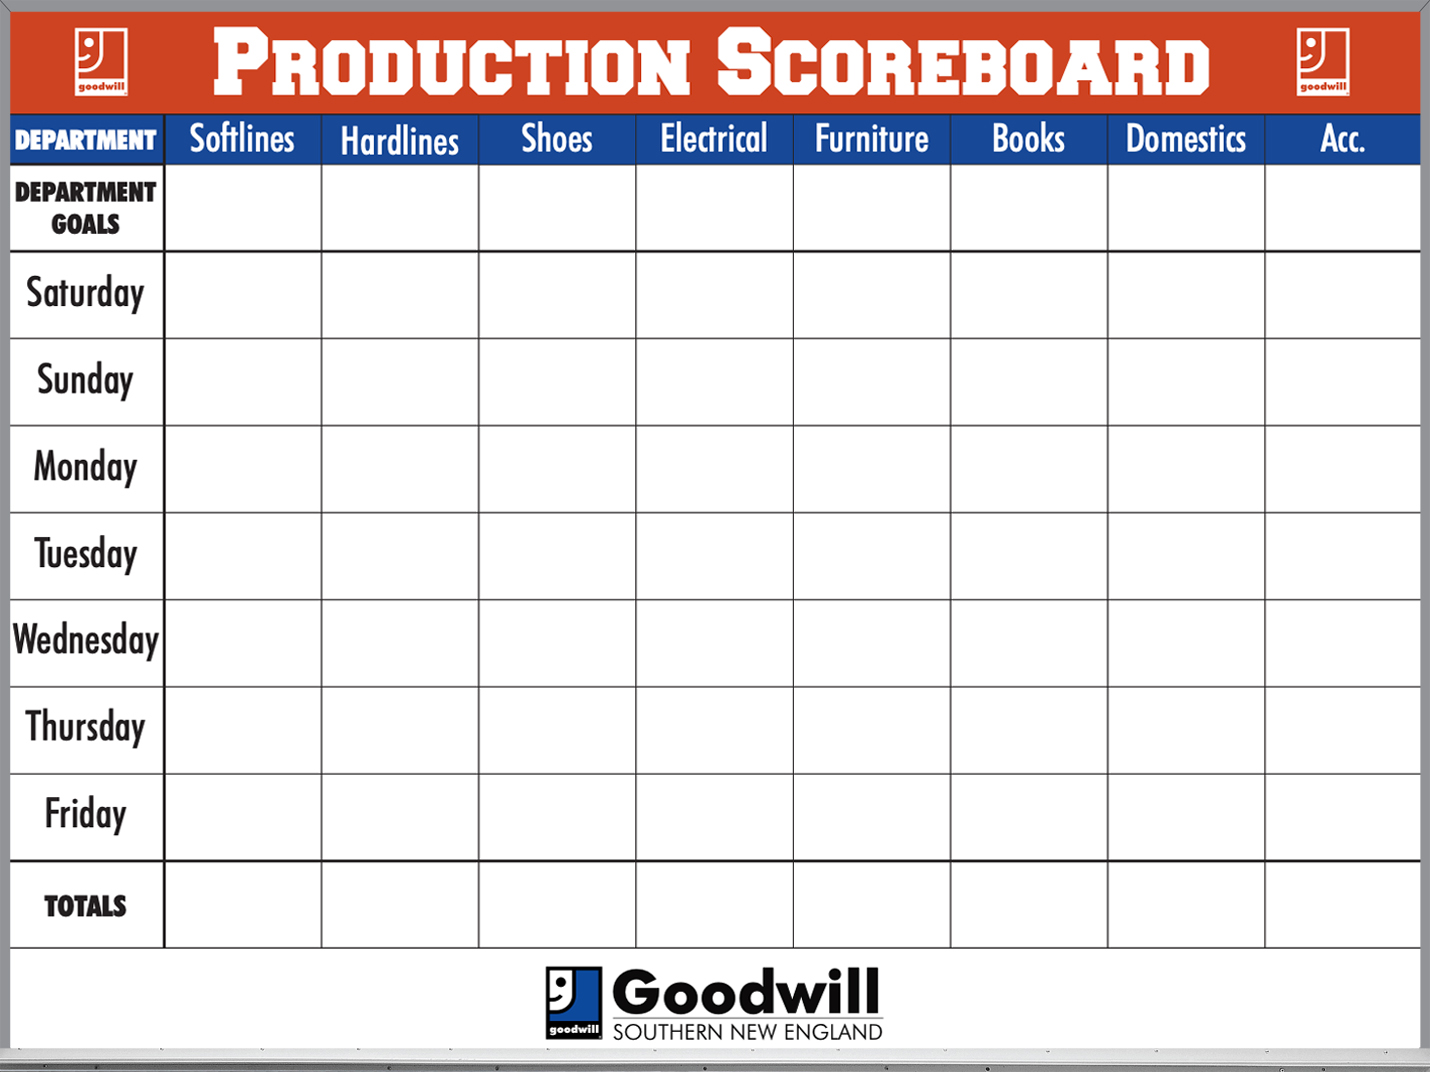 Goodwill production scoreboard whiteboard custom printed